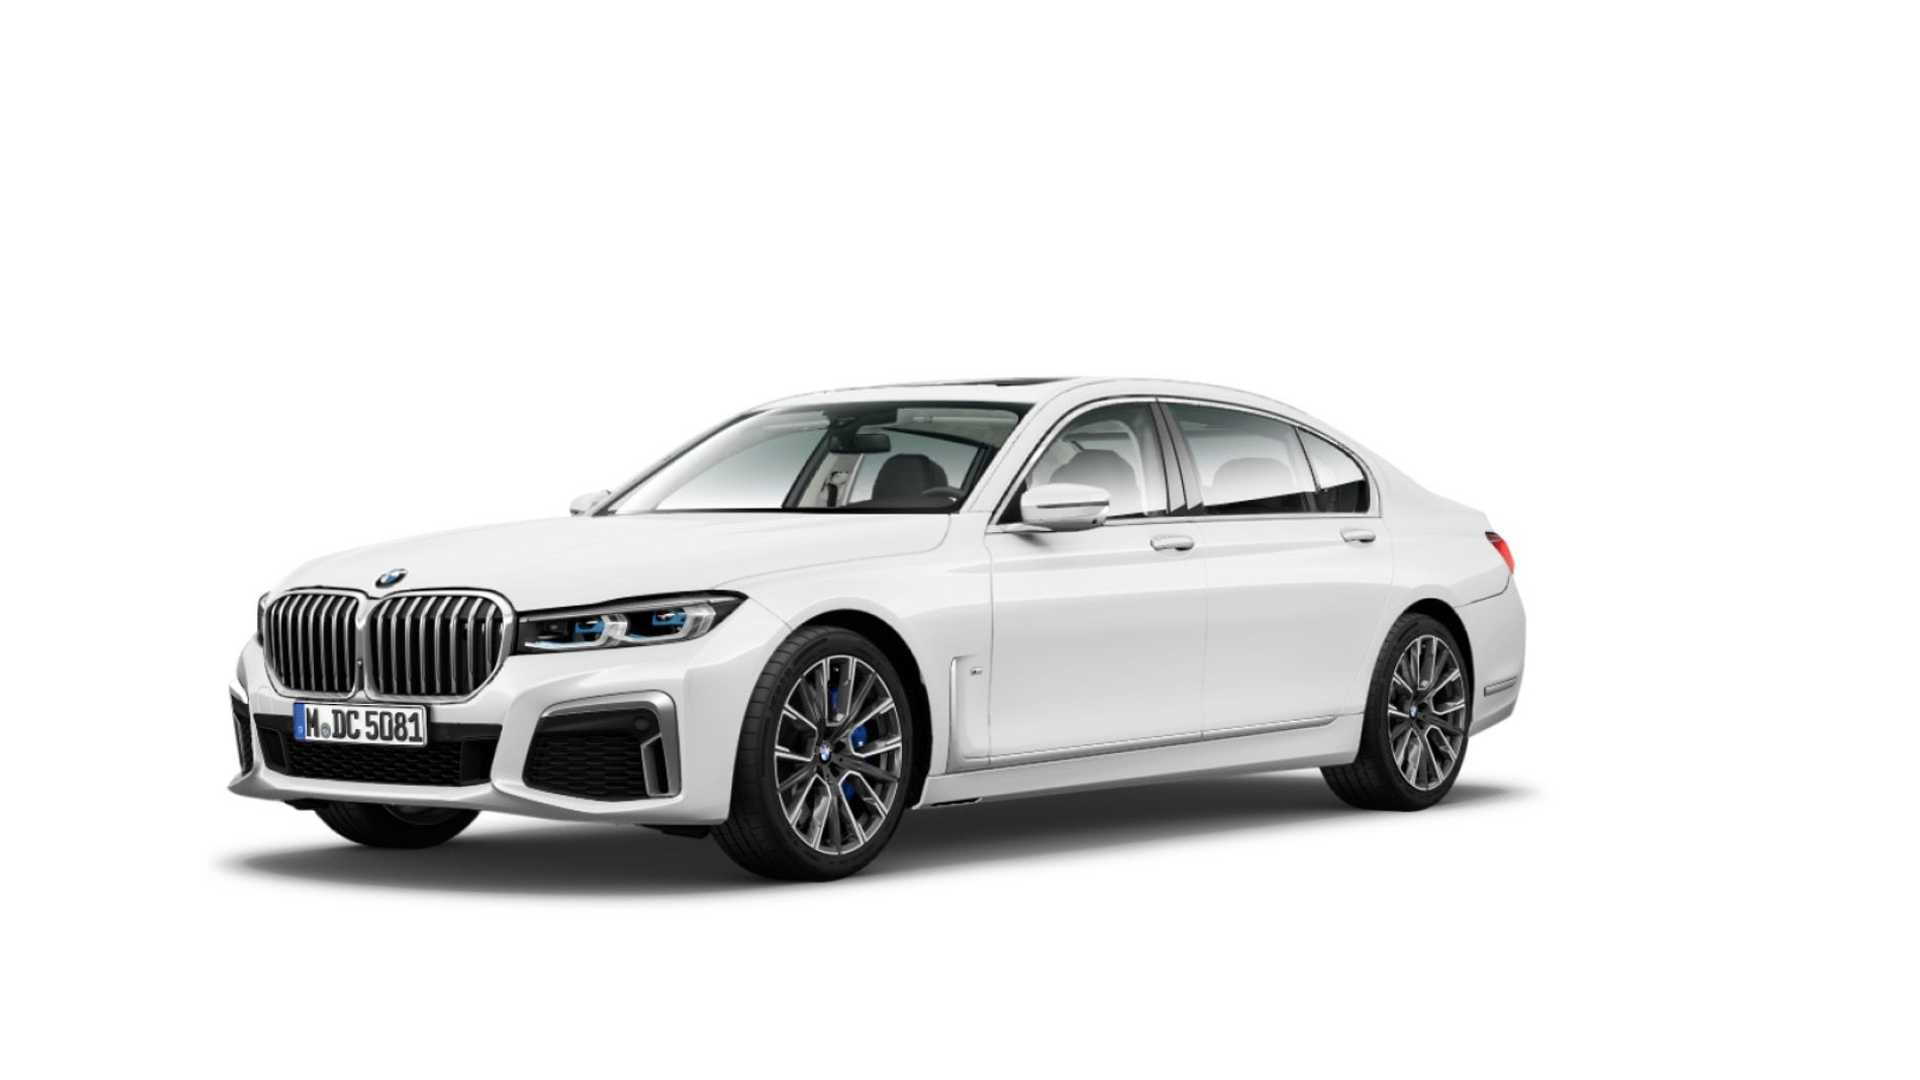 2020 BMW 7-Series leaked - Image via BMW Blog